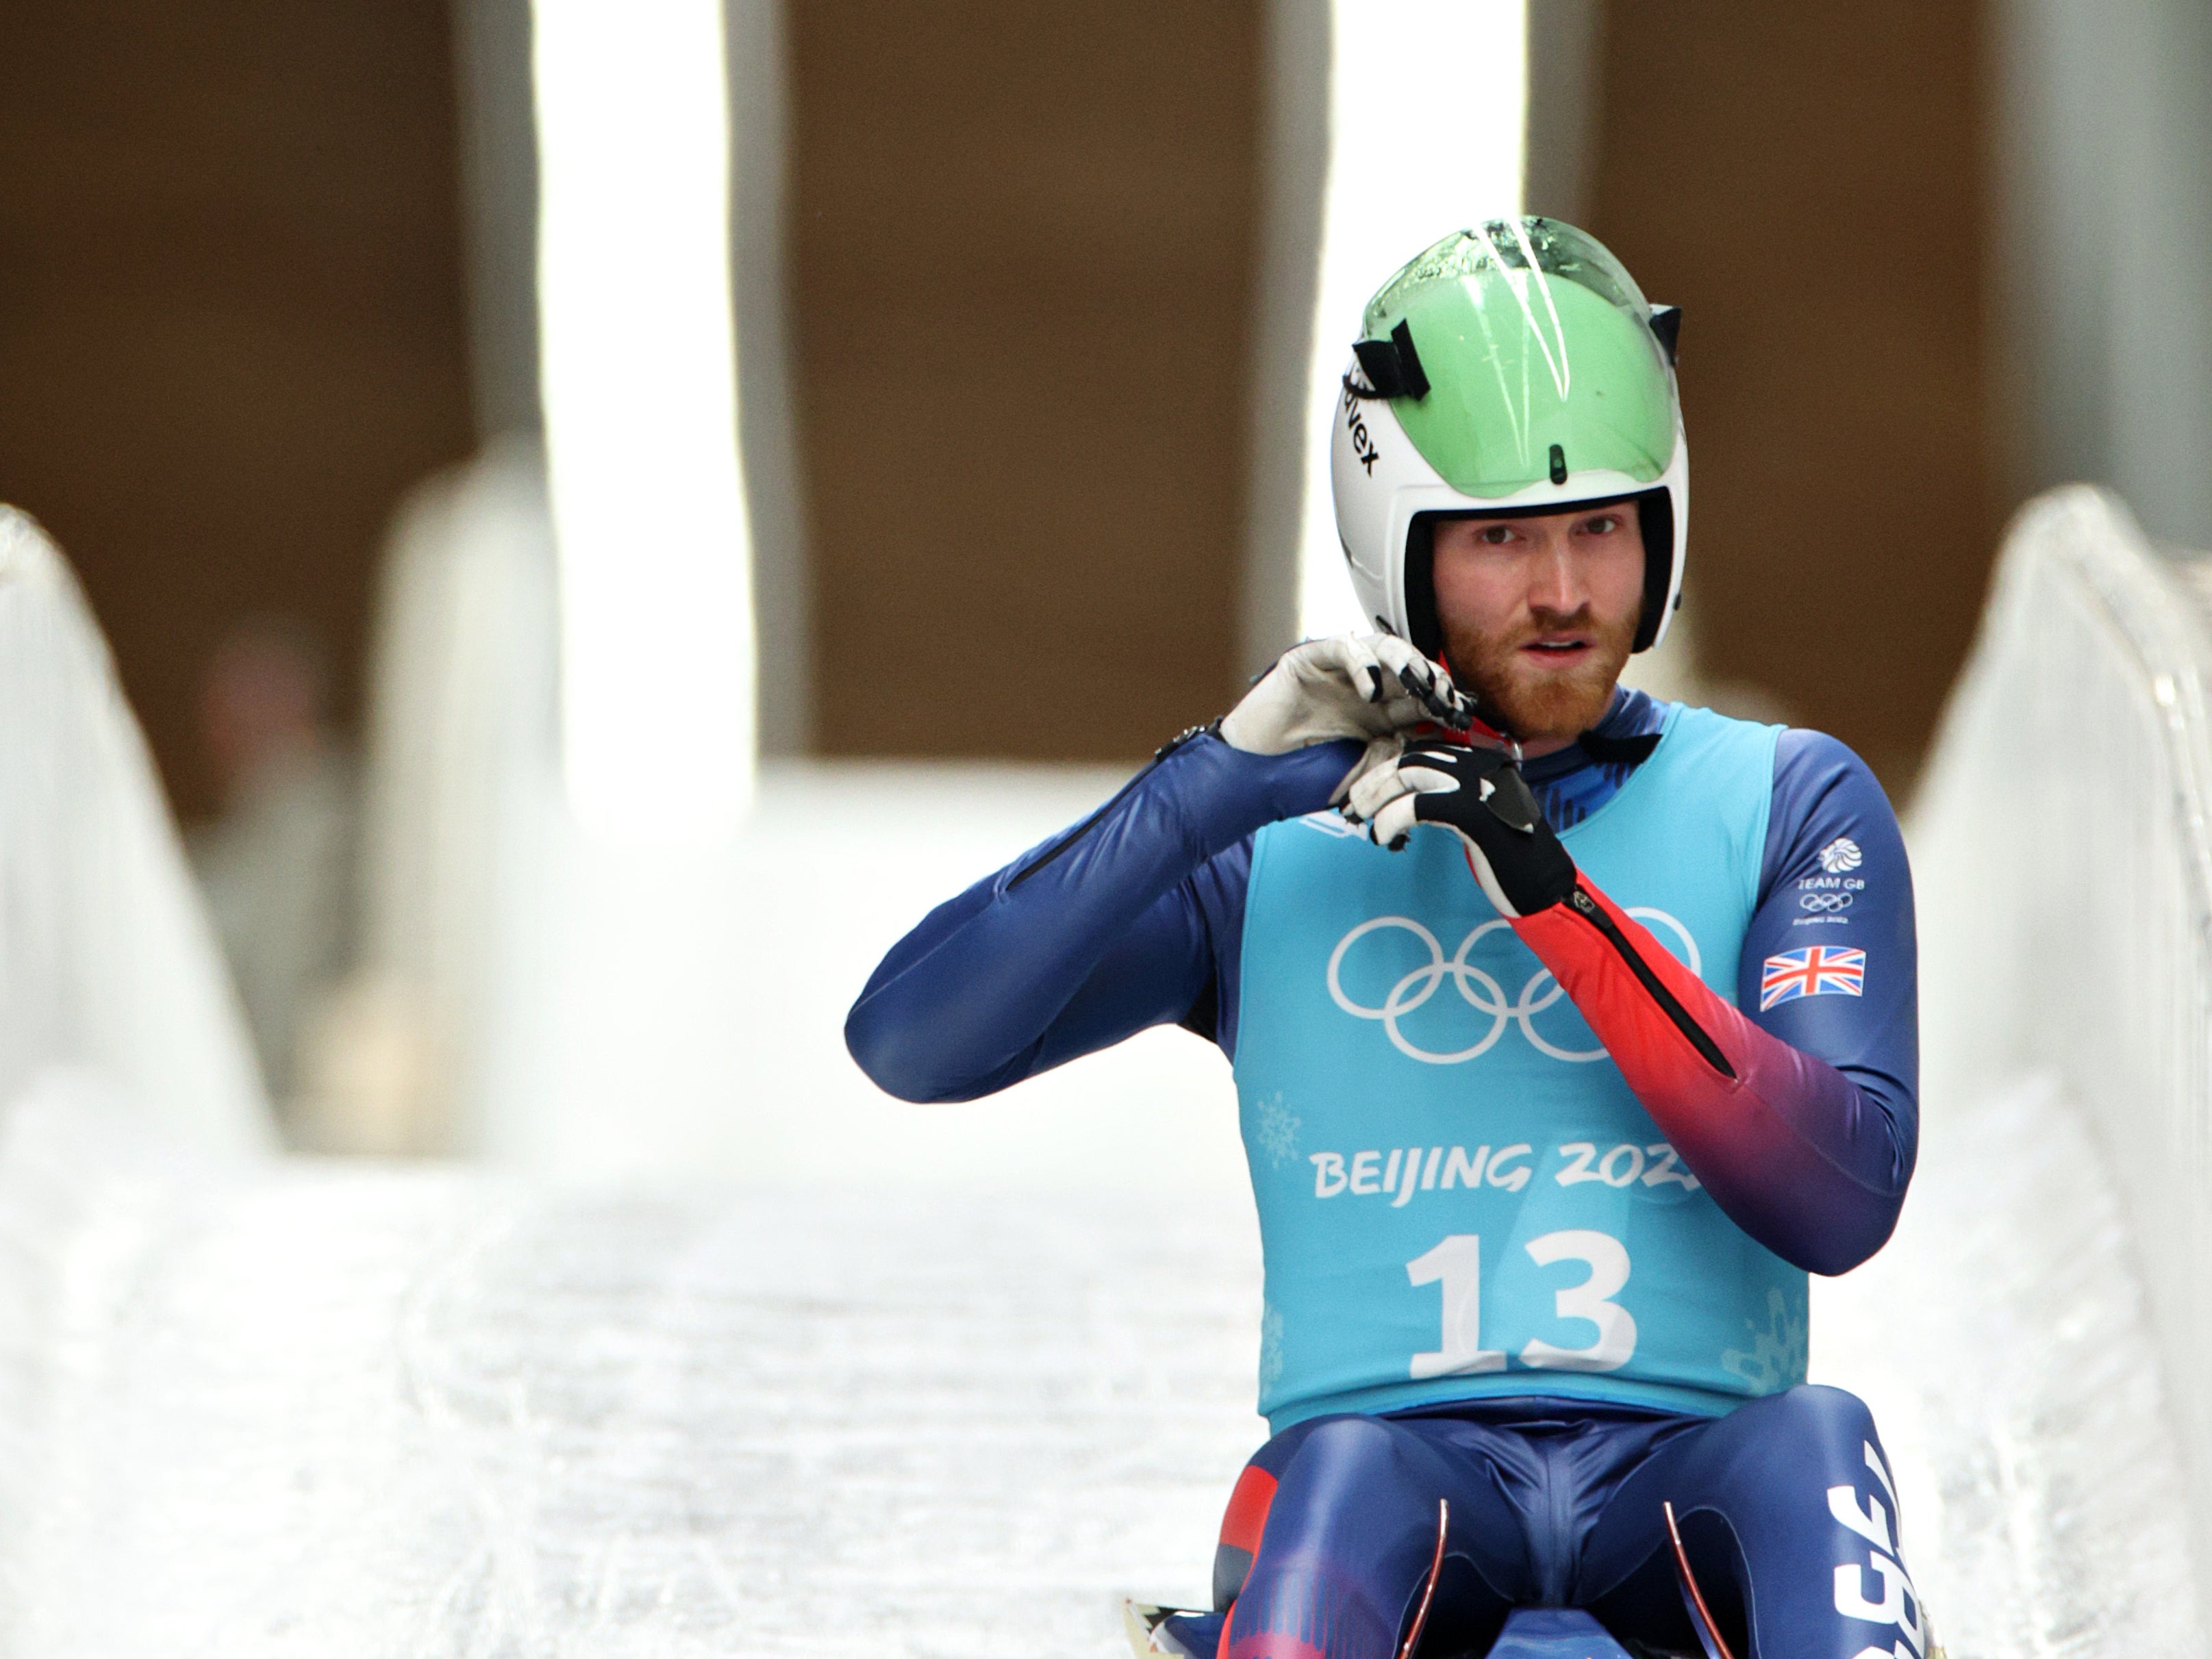 Rupert Staudinger in training ahead of the Winter Olympics